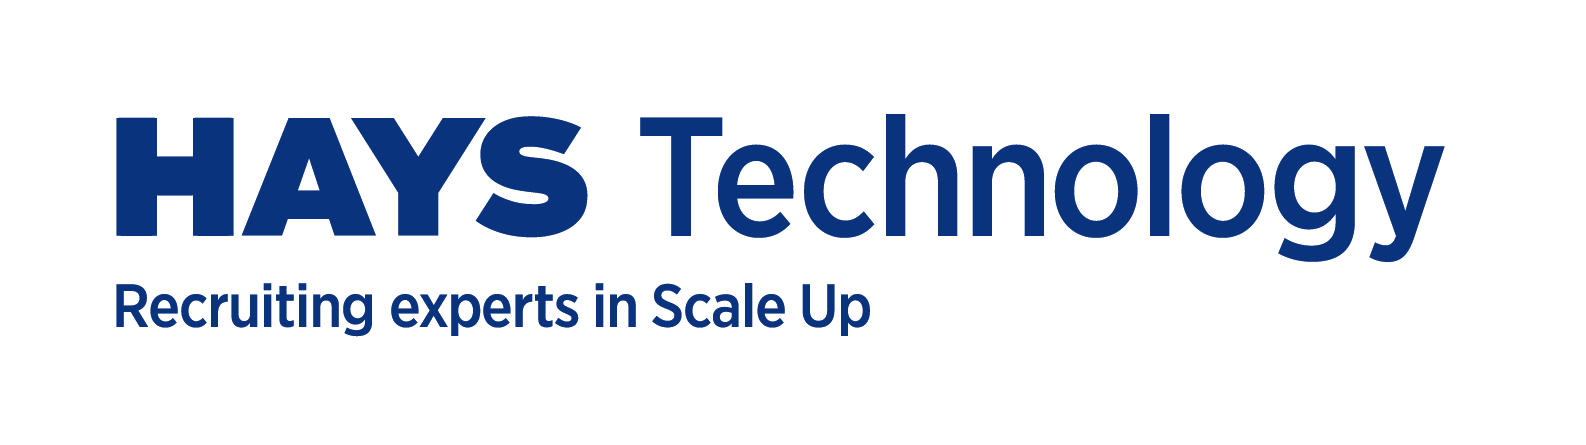 HAYS Technology's logo